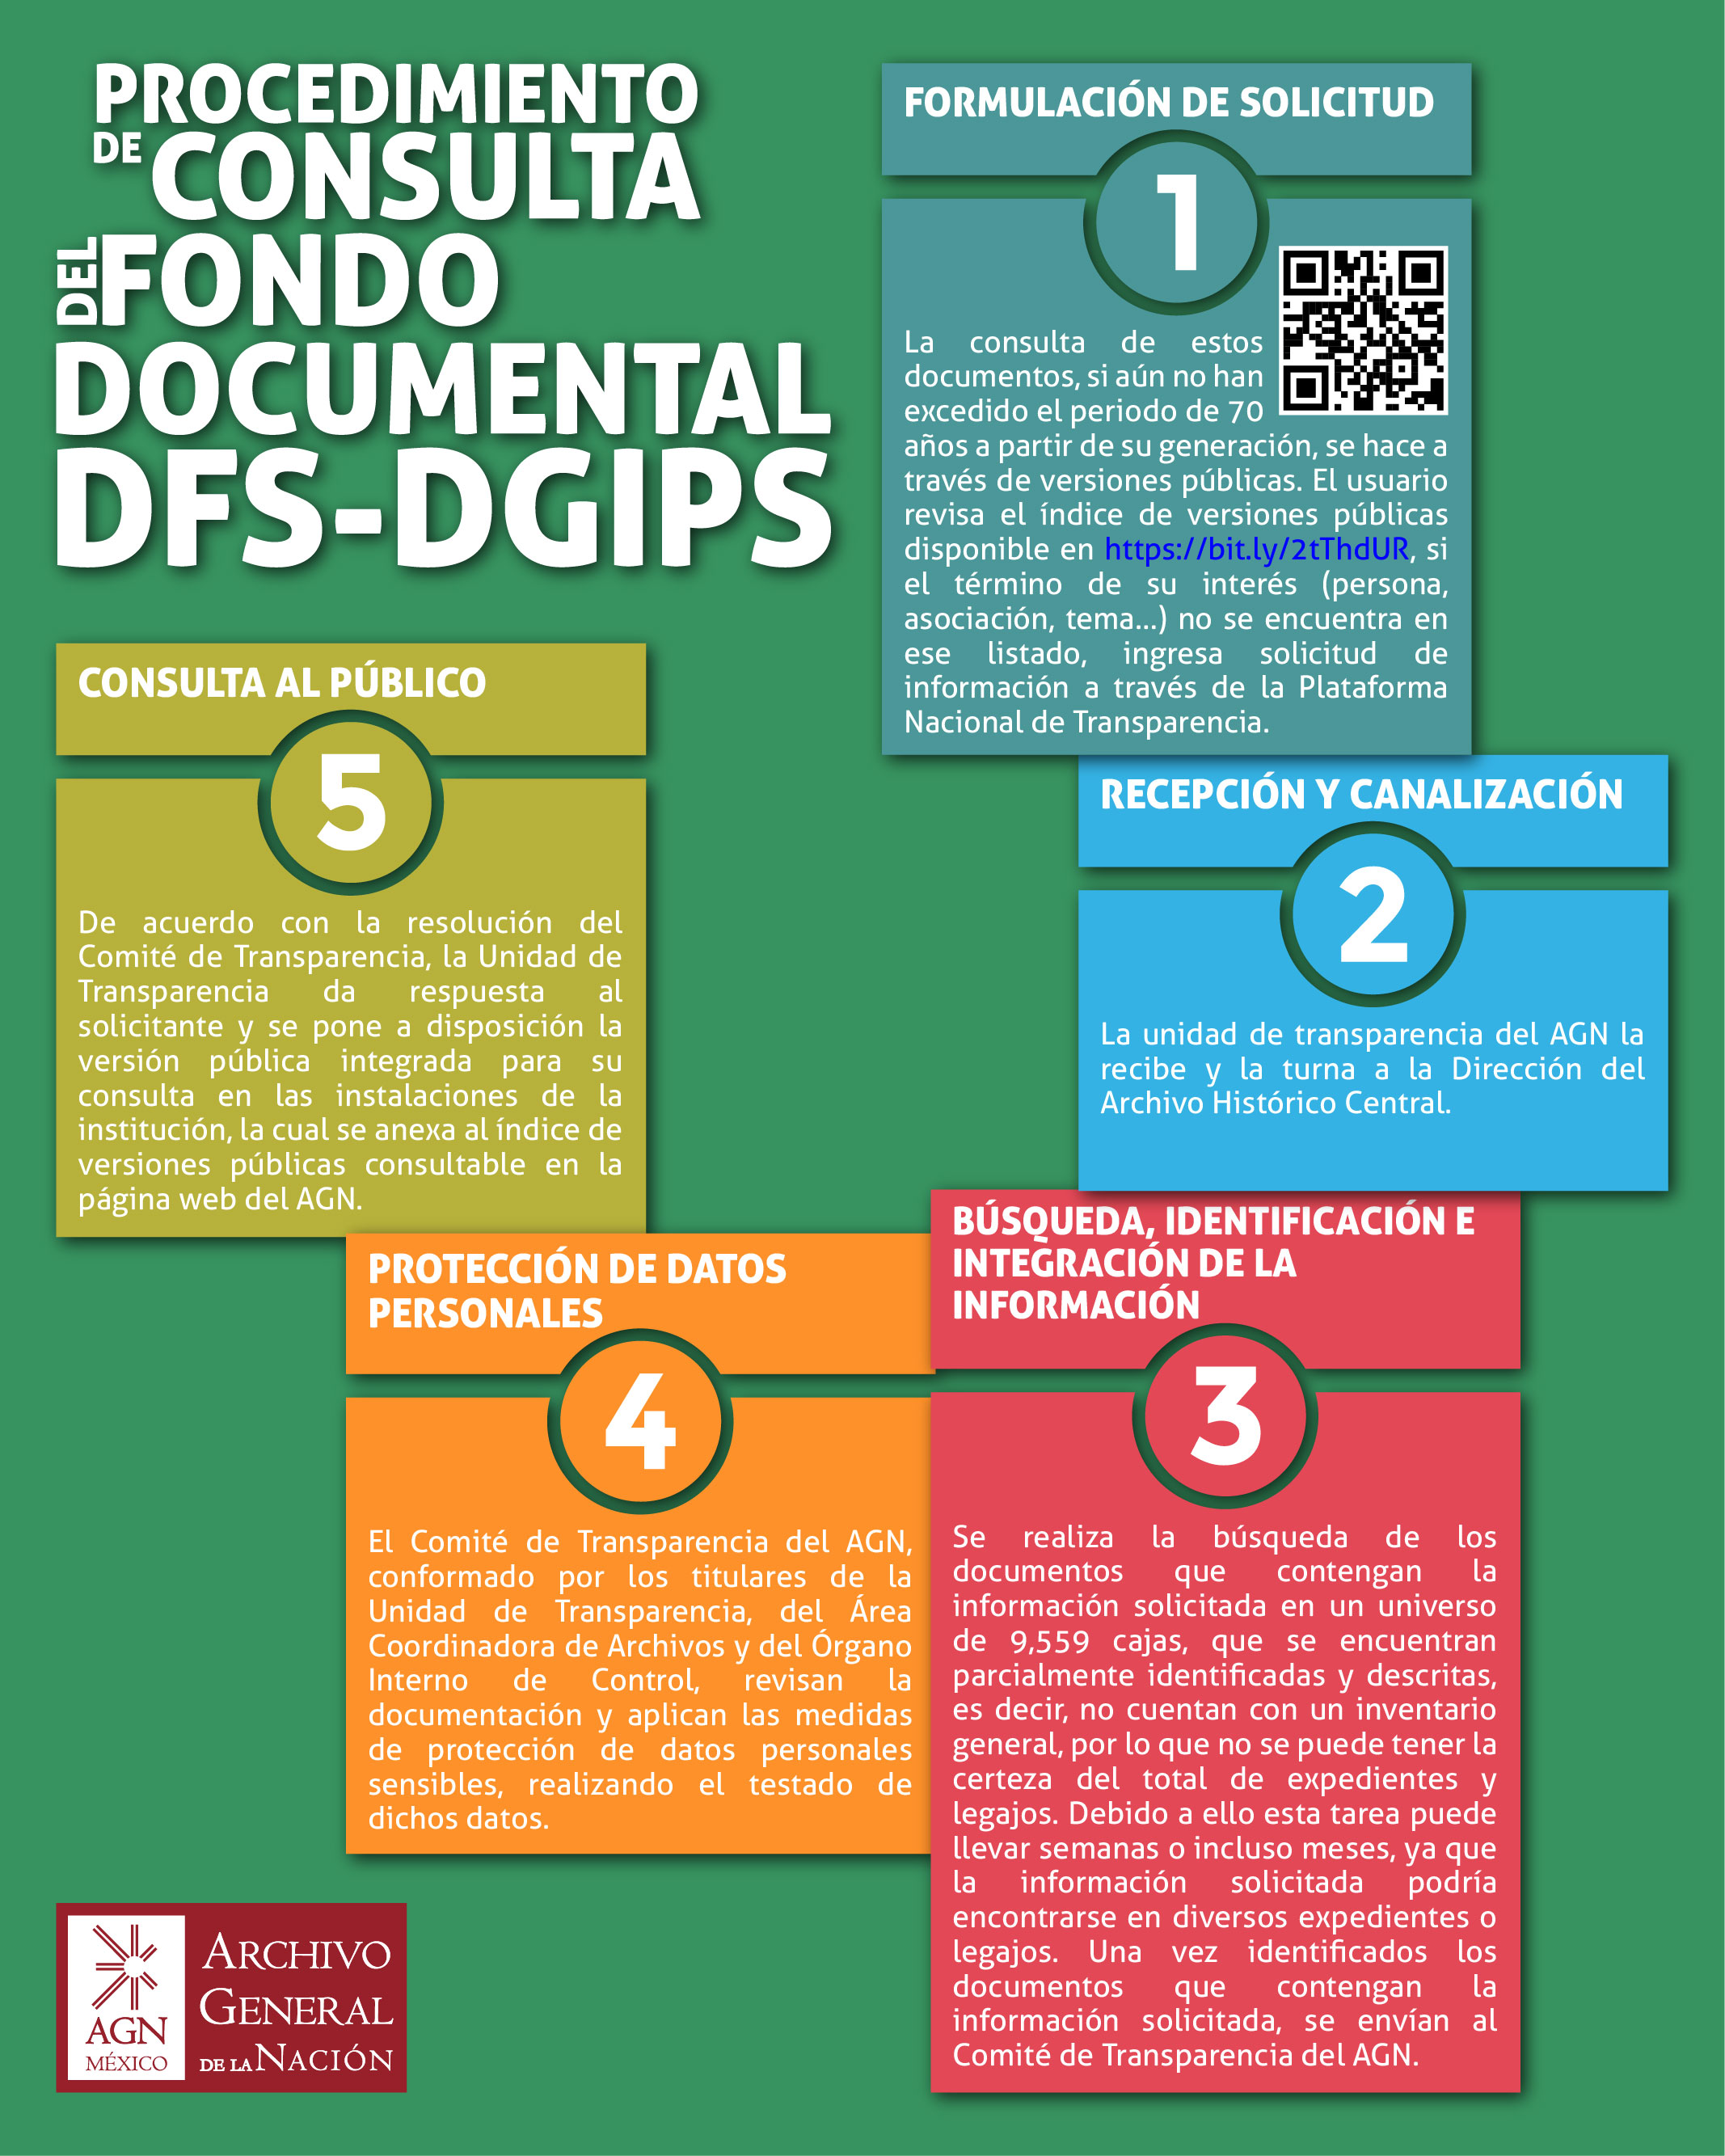 /cms/uploads/image/file/559940/Infogrf_a_Procedimiento_consulta_DFS-DGIPS.jpg